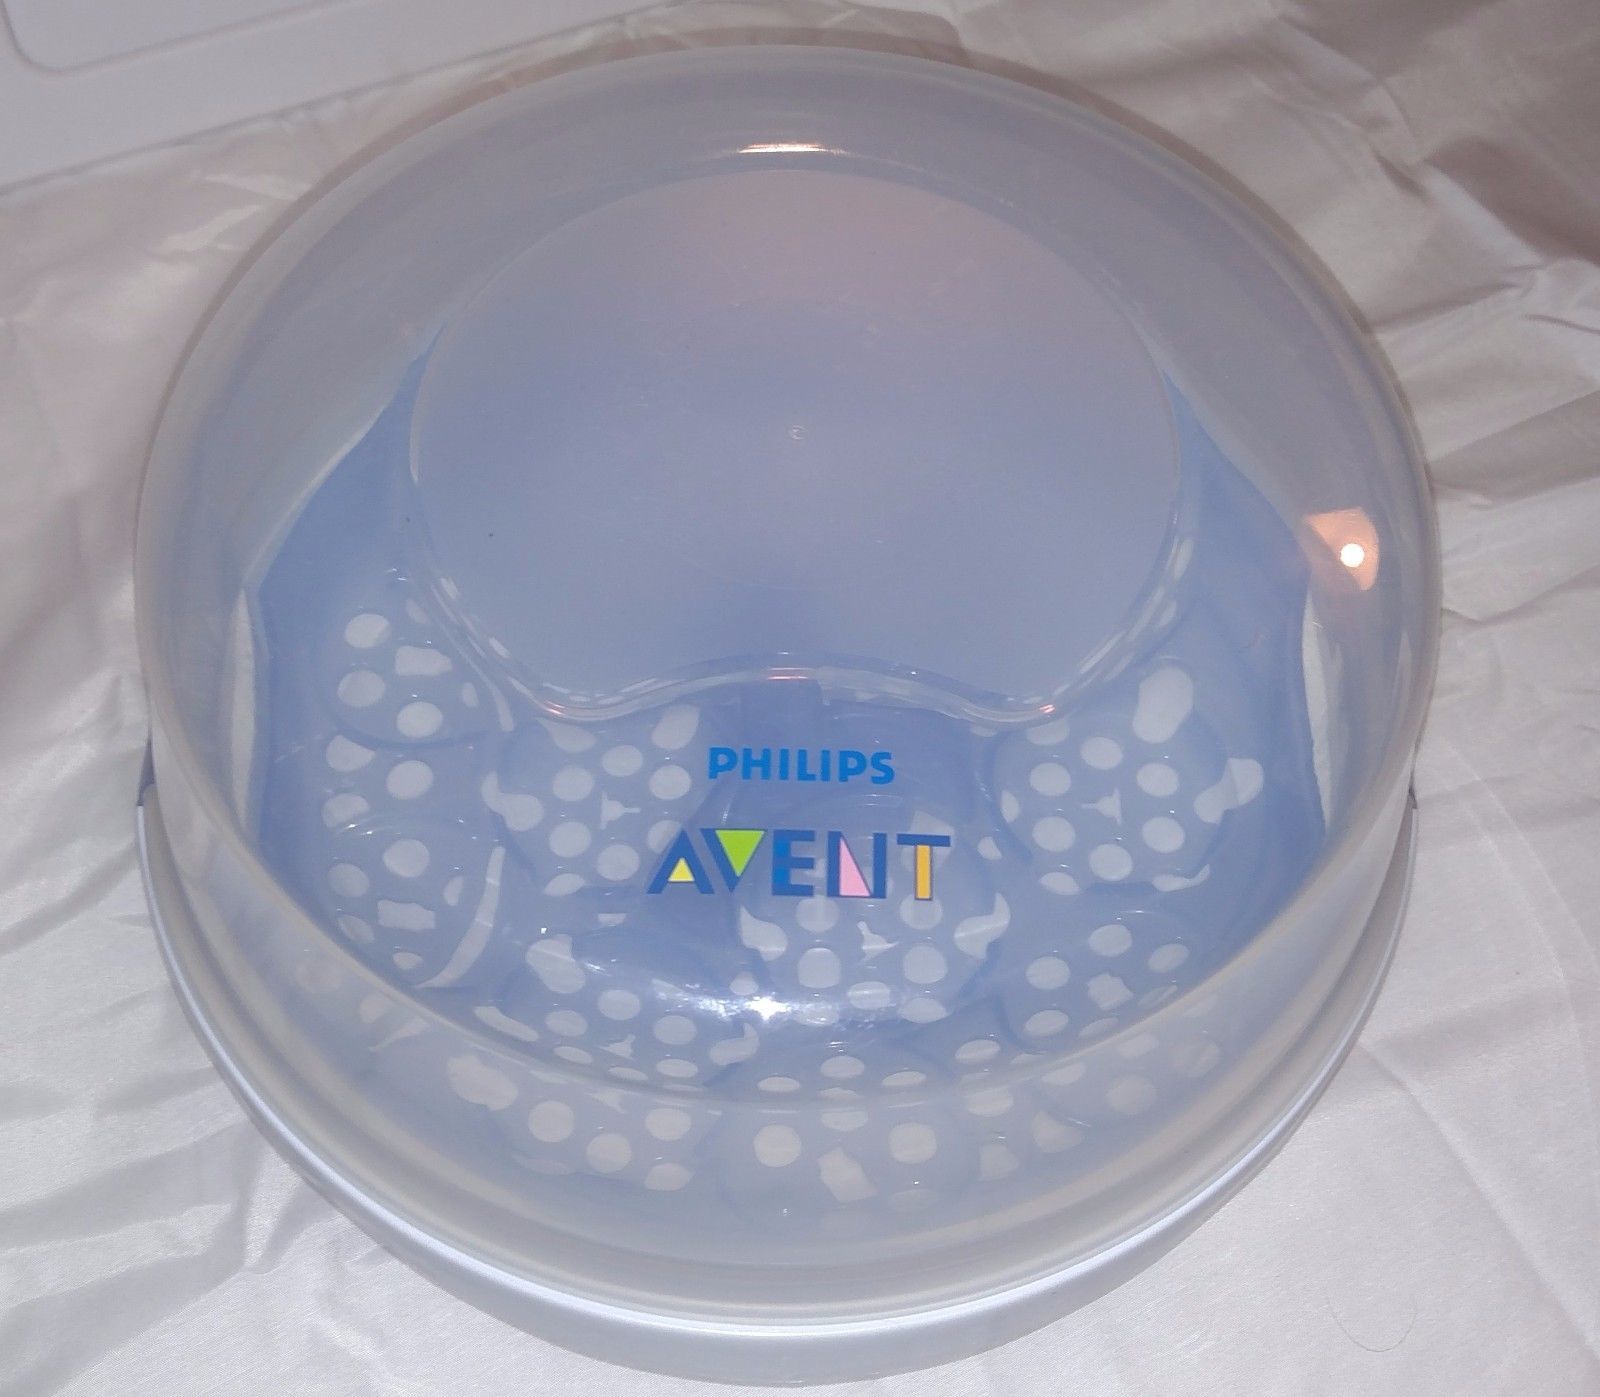 STERILIZER Philips AVENT Baby Bottle Sterilizer BPA Free Microwave England Child - $27.95